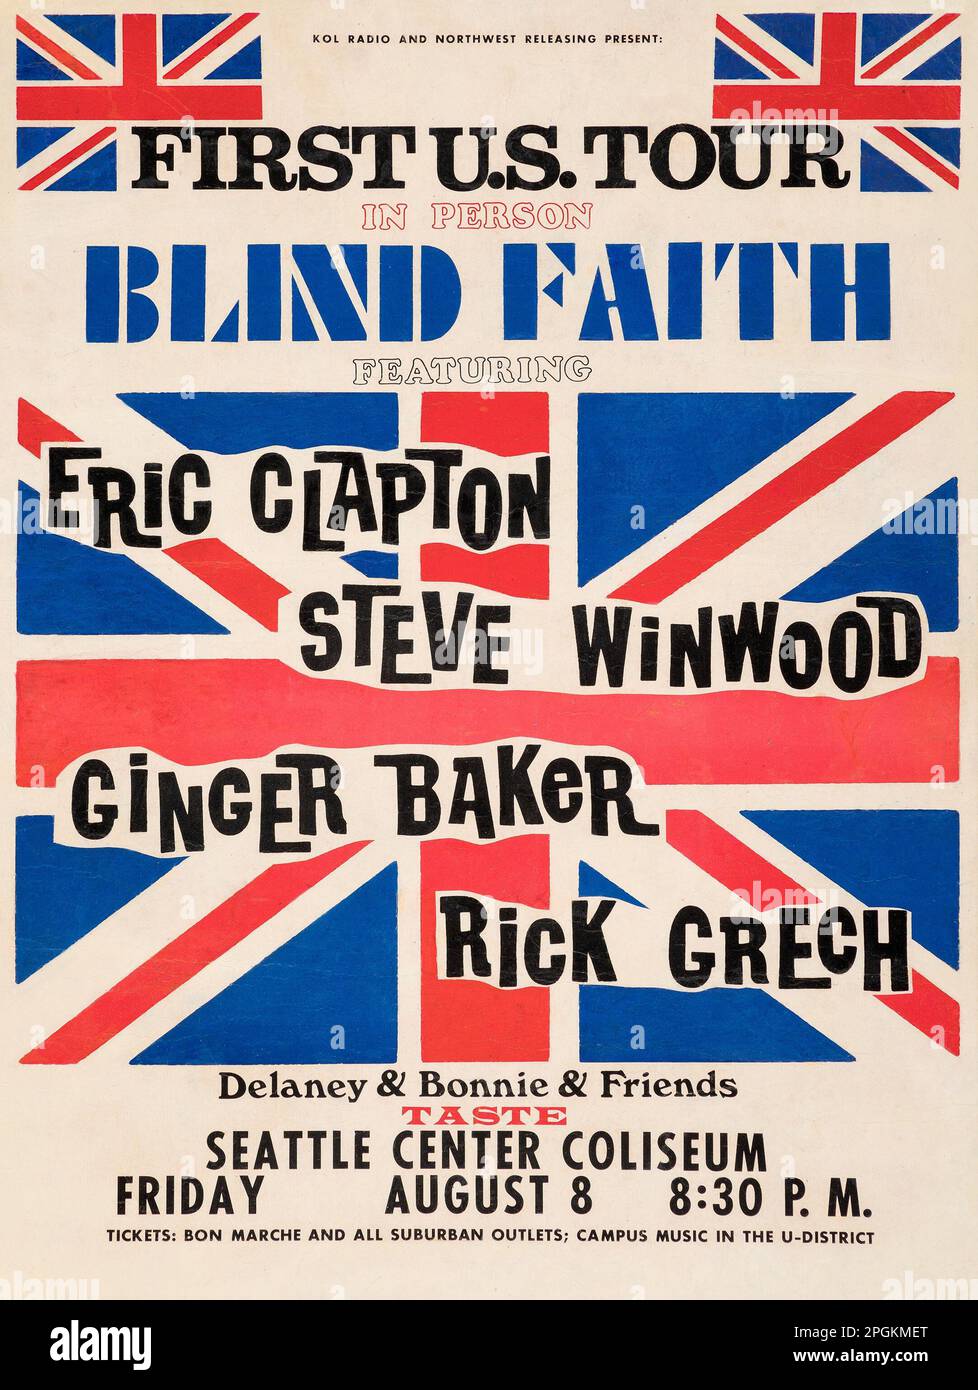 Blind Faith feat Eric Clapton, Steve Winwood, Ginger Baker, Rick Grech 1969 - Seattle Center Coliseum, Washington Concert Poster. Stock Photo